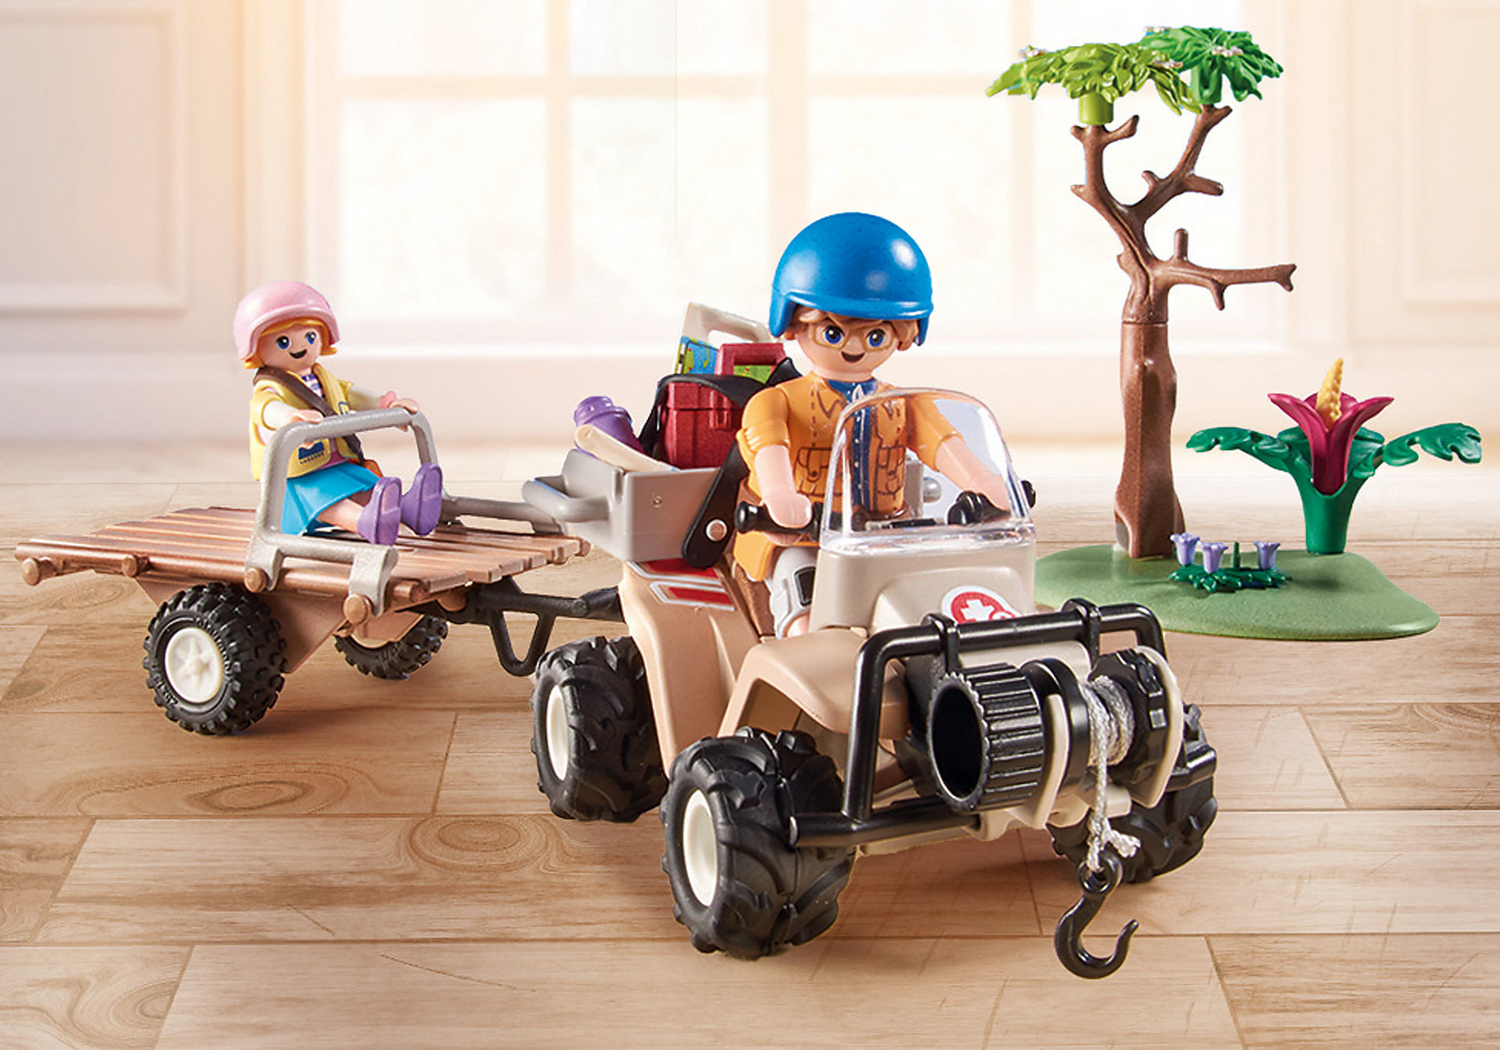 Playmobil Wiltopia - Animal Rescue Quad - The Toy Box Hanover